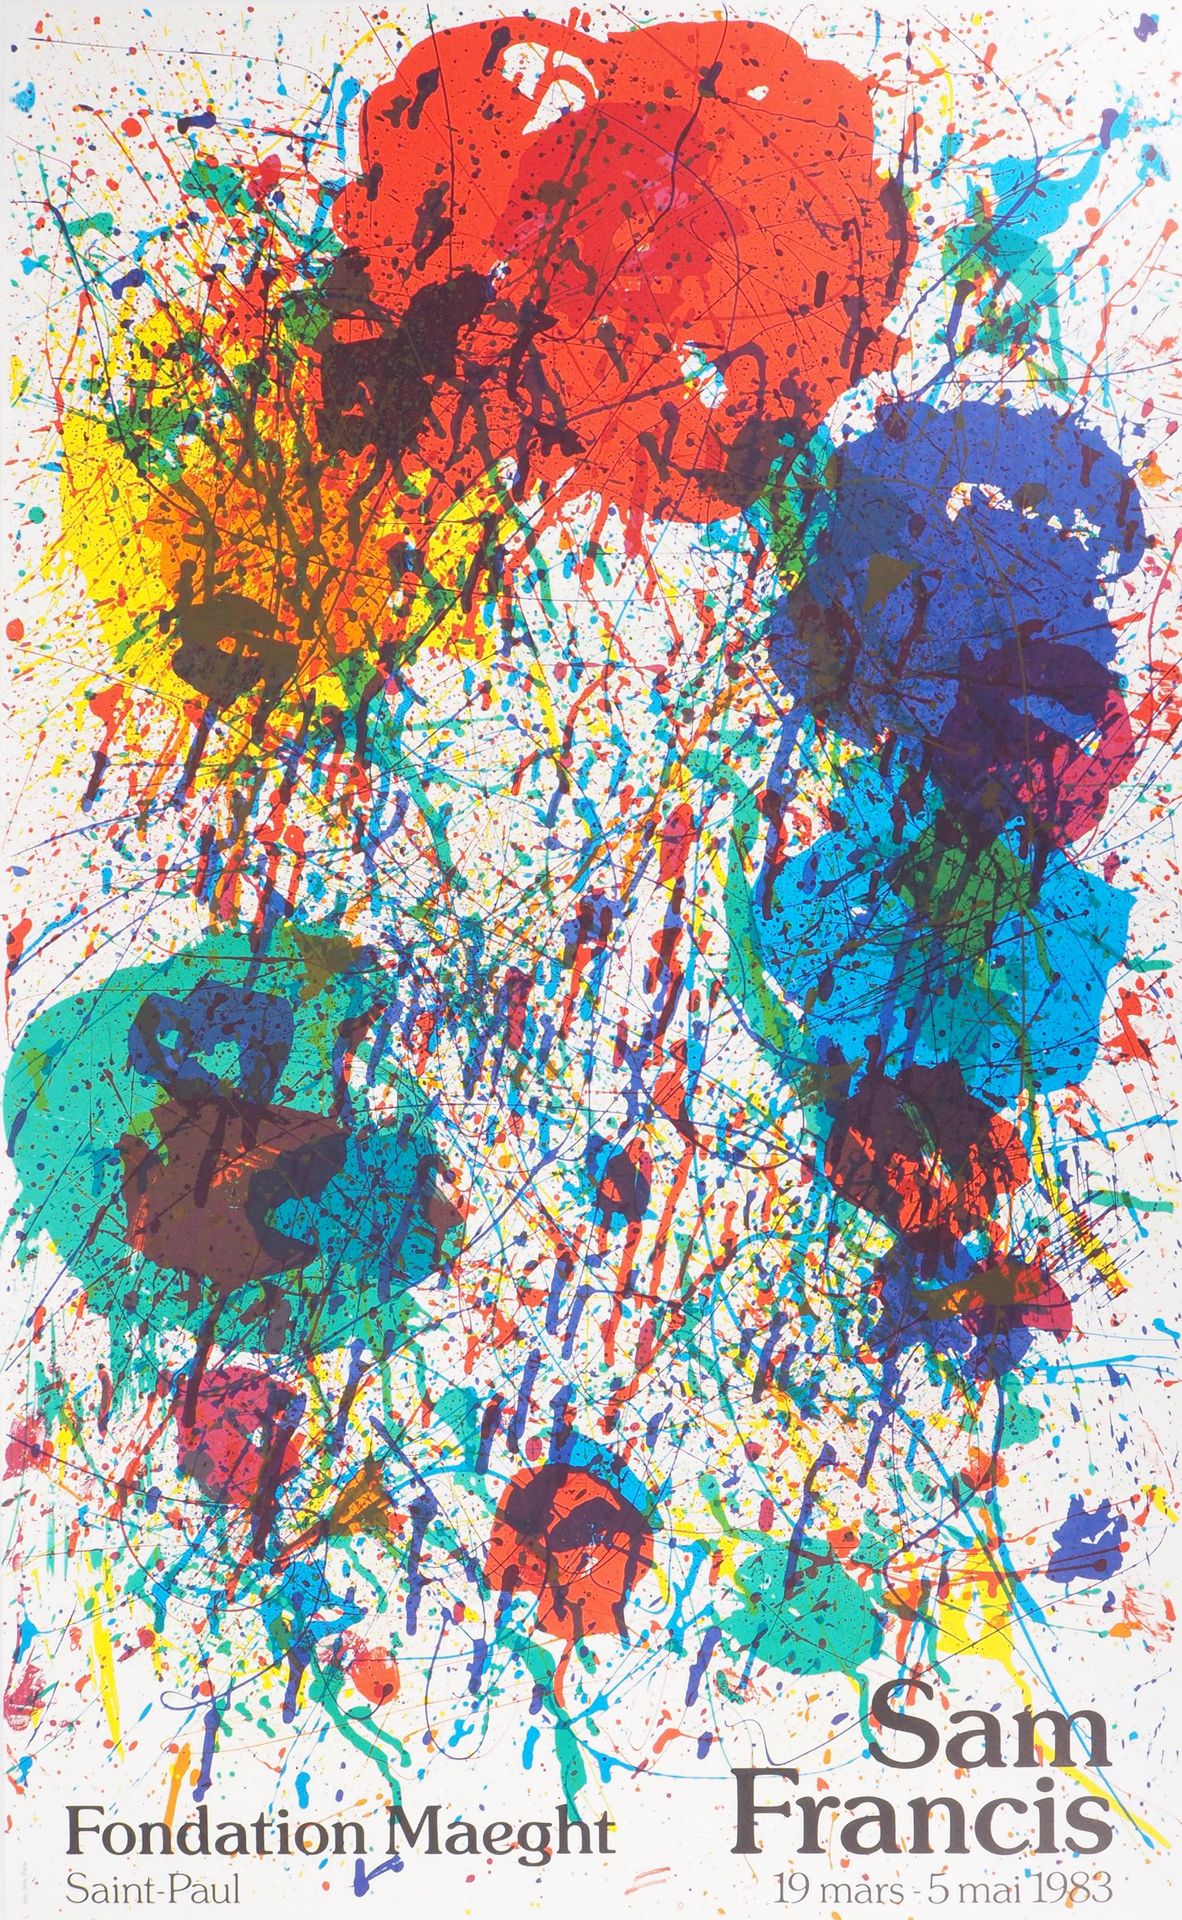 Sam FRANCIS 萨姆-弗兰西斯

爆炸性的色彩

这一时期的原版石印海报

为1983年在迈格特基金会举办的山姆-弗朗西斯展览而制作

打印机：Arte&hellip;